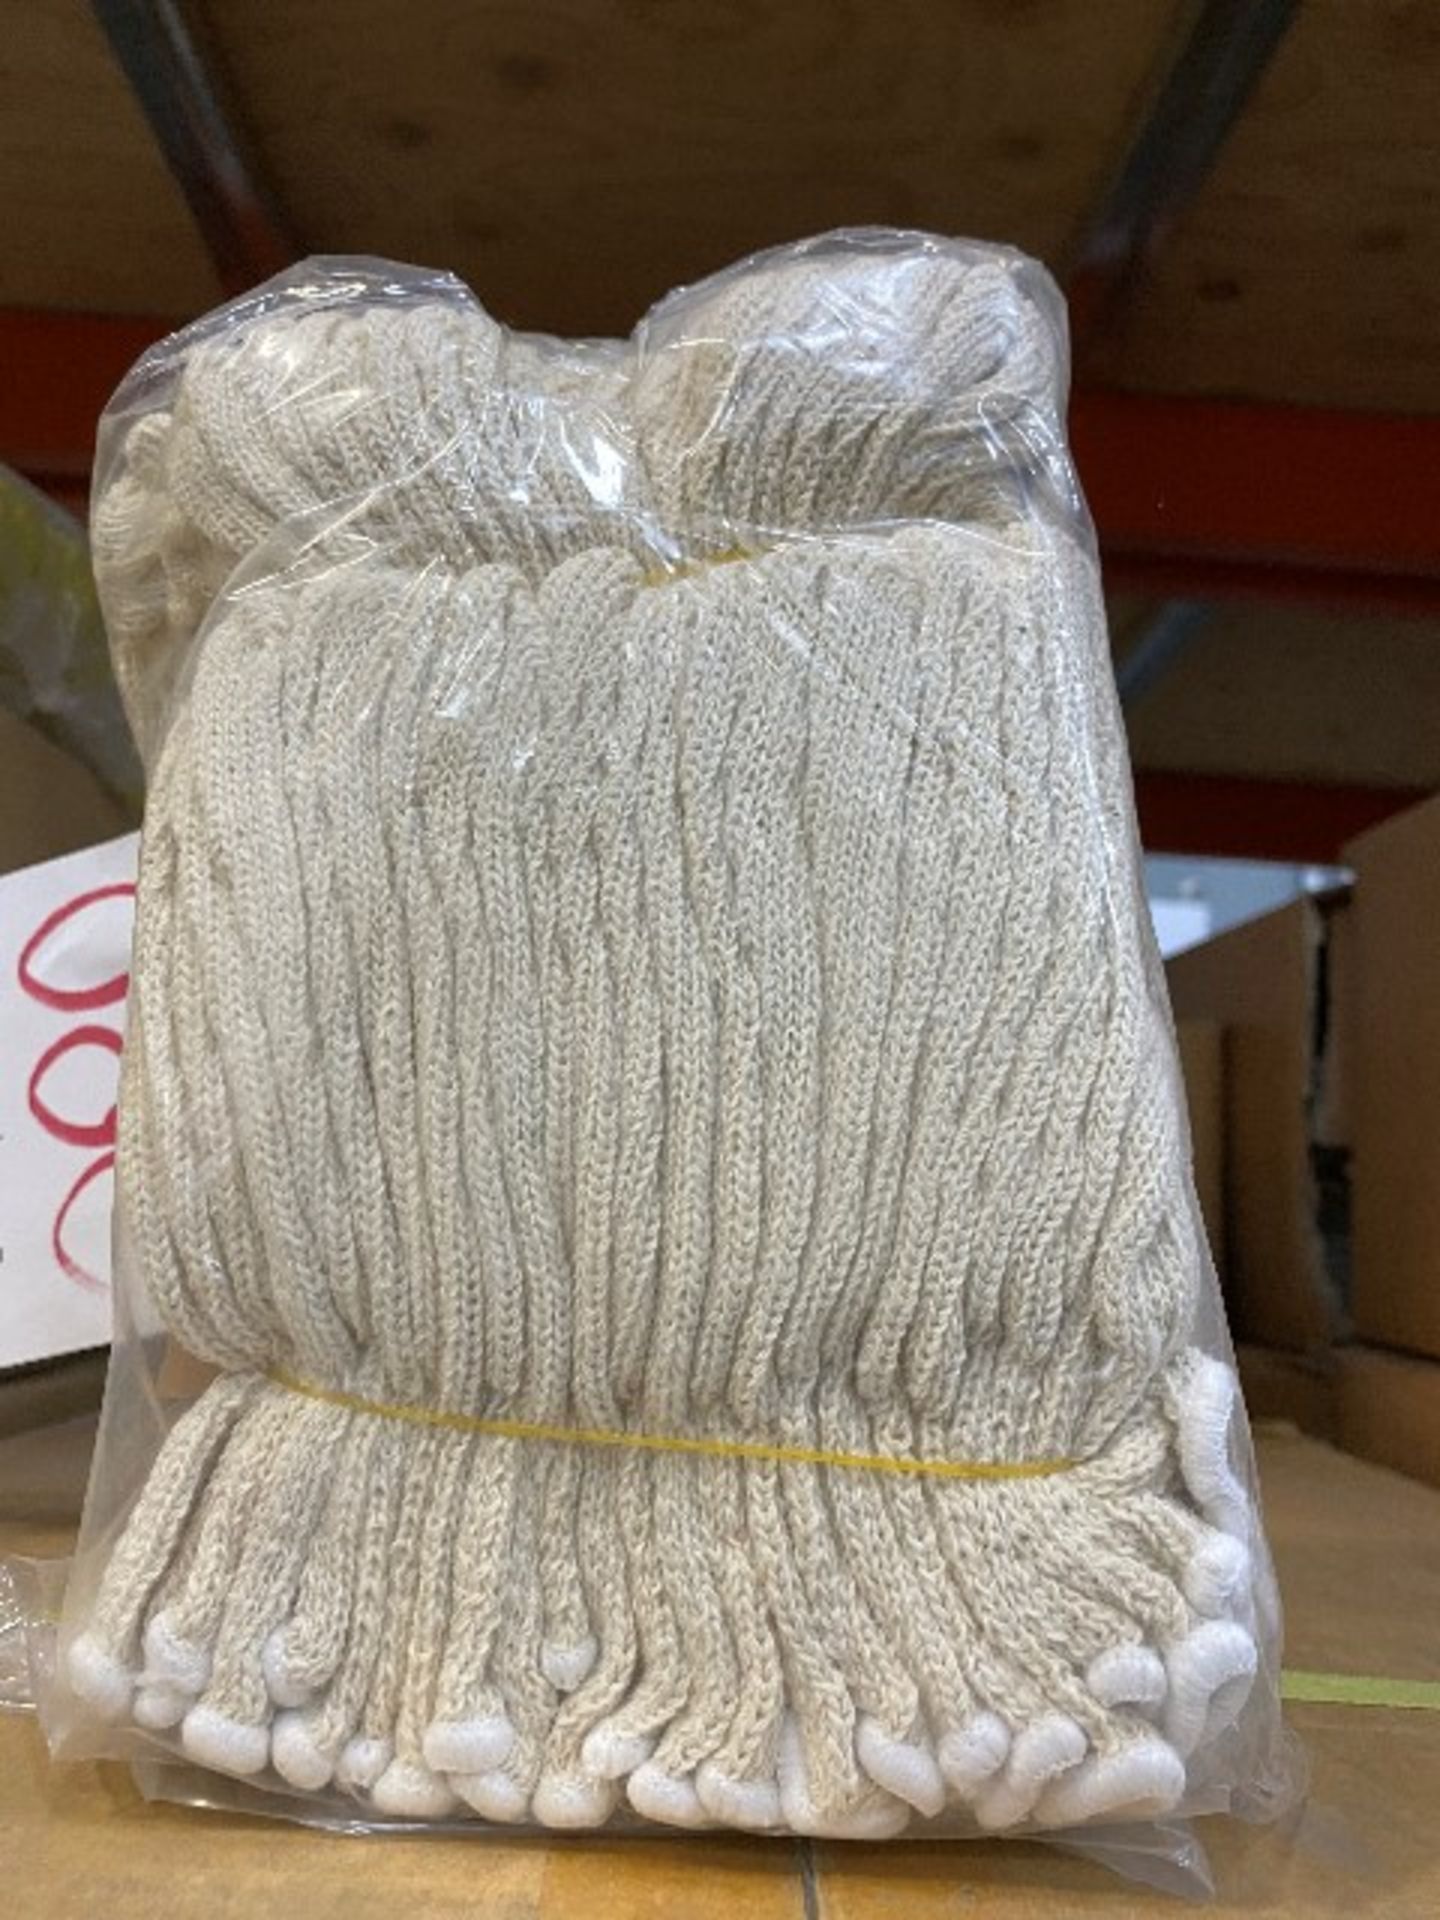 Superior Sure-Knit string knit, cotton/poly blend,size: large, 27 dozens - Image 2 of 2